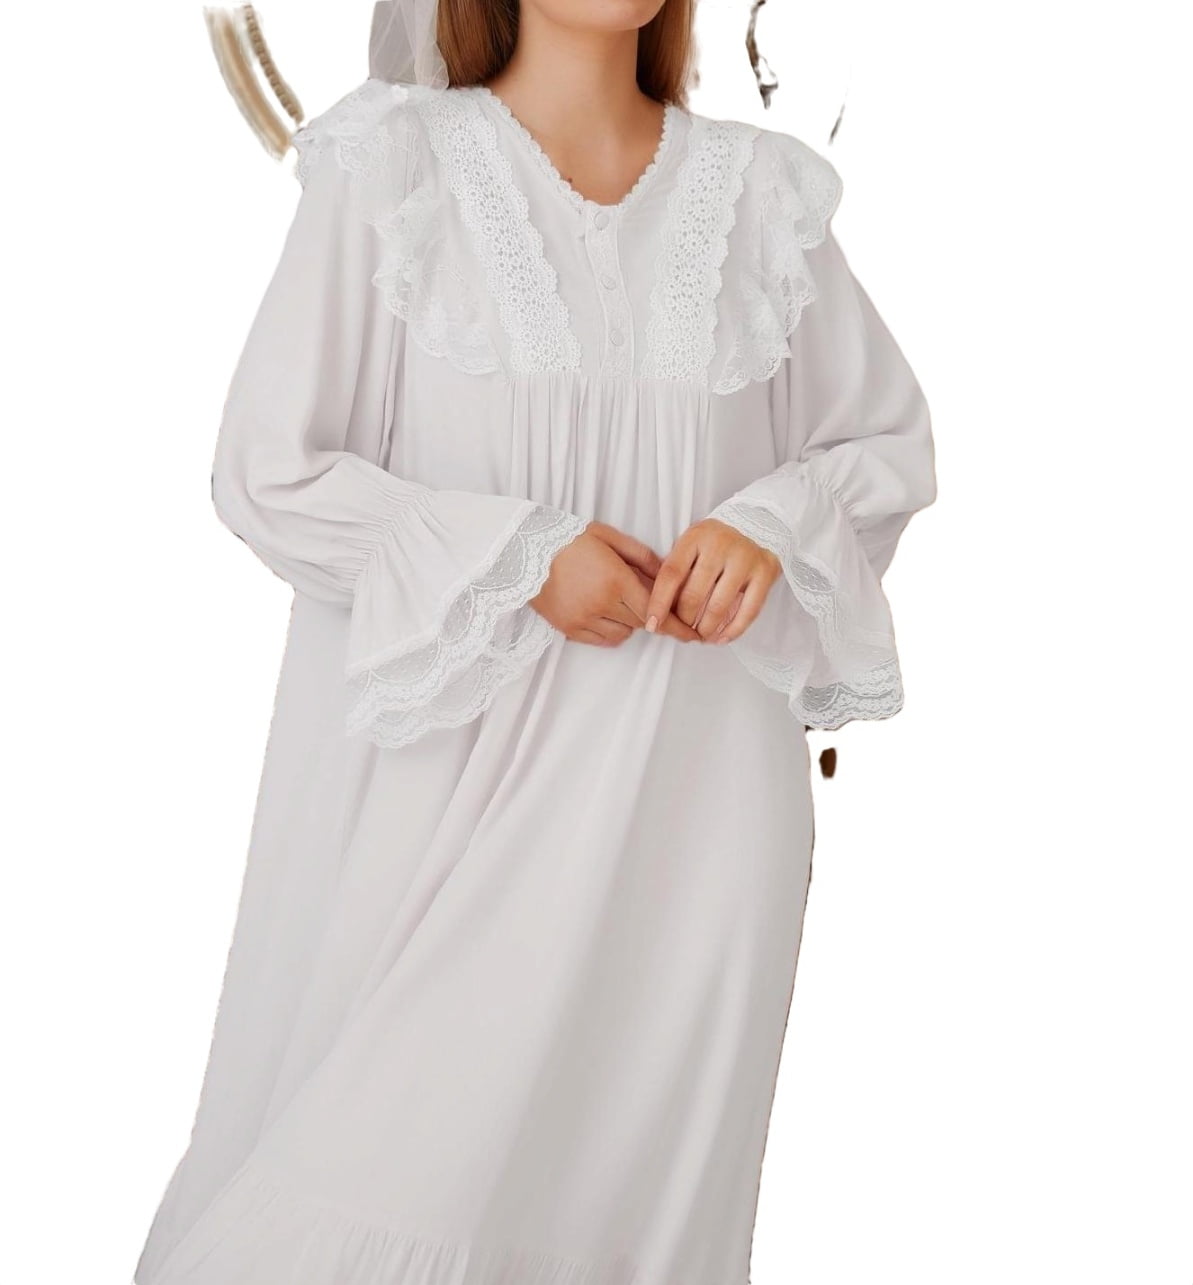 Fashion (White)QSROCIO Women's Pajamas Sling Dress Lace Edge